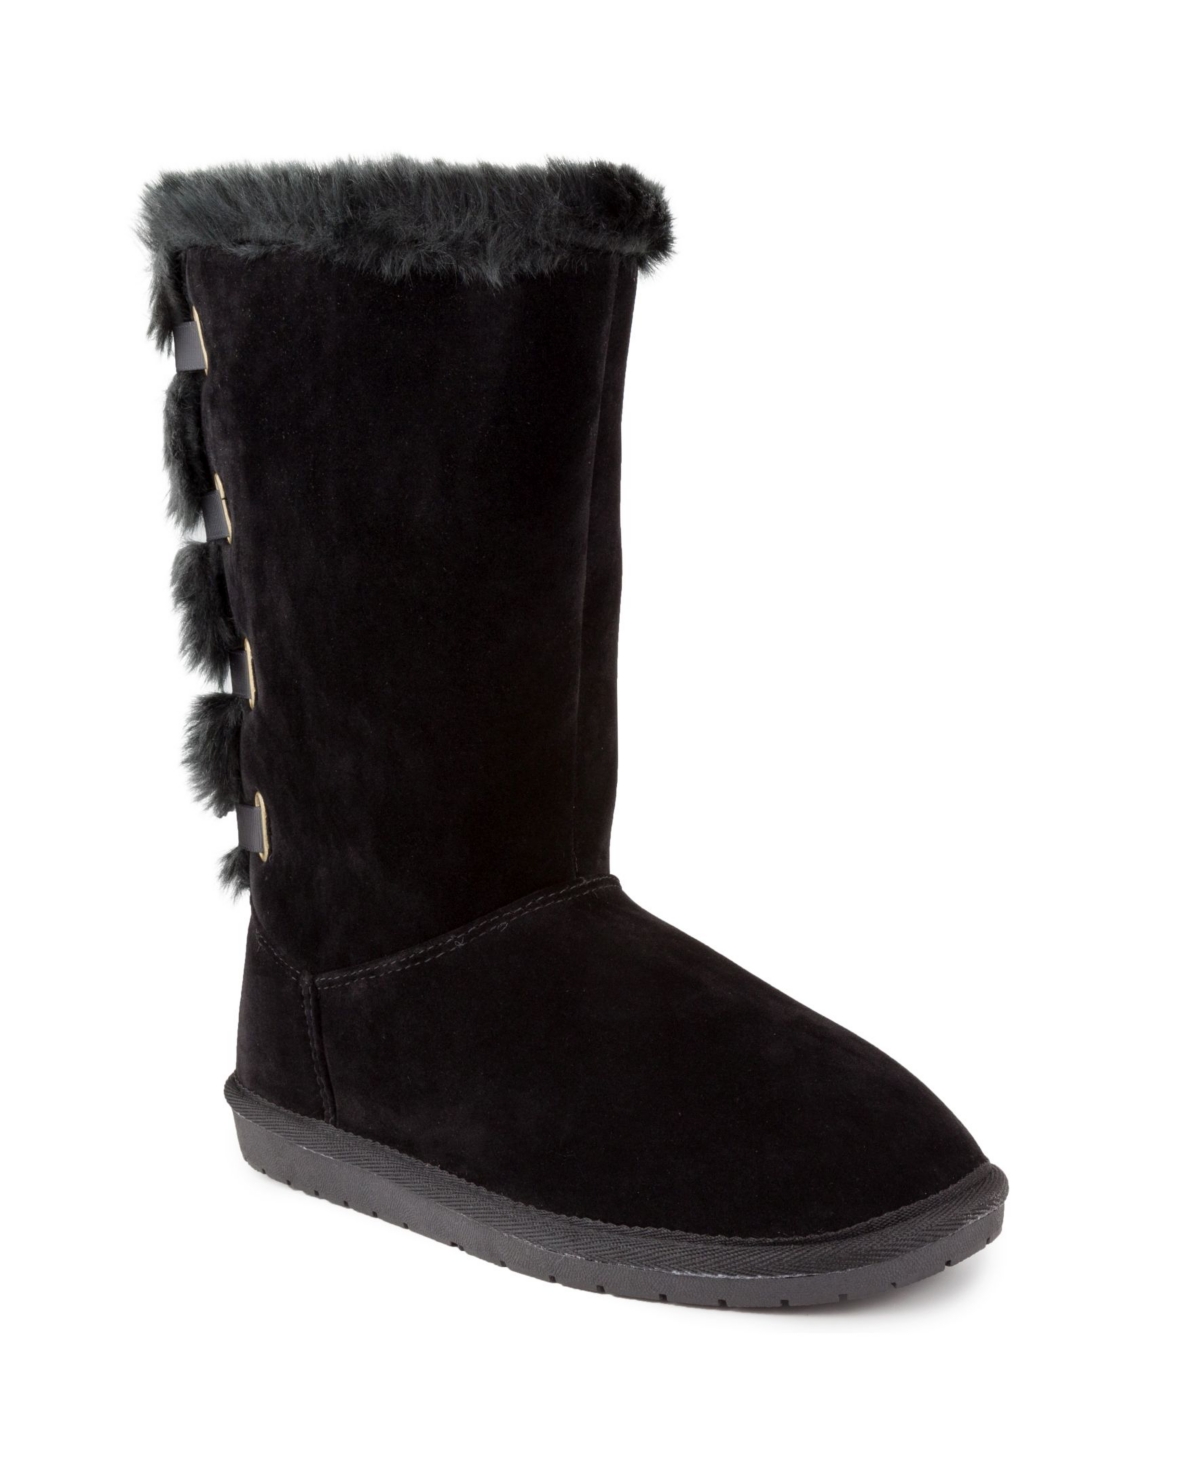 Women's Panthea Fuzzy Winter Tall Boots - Black